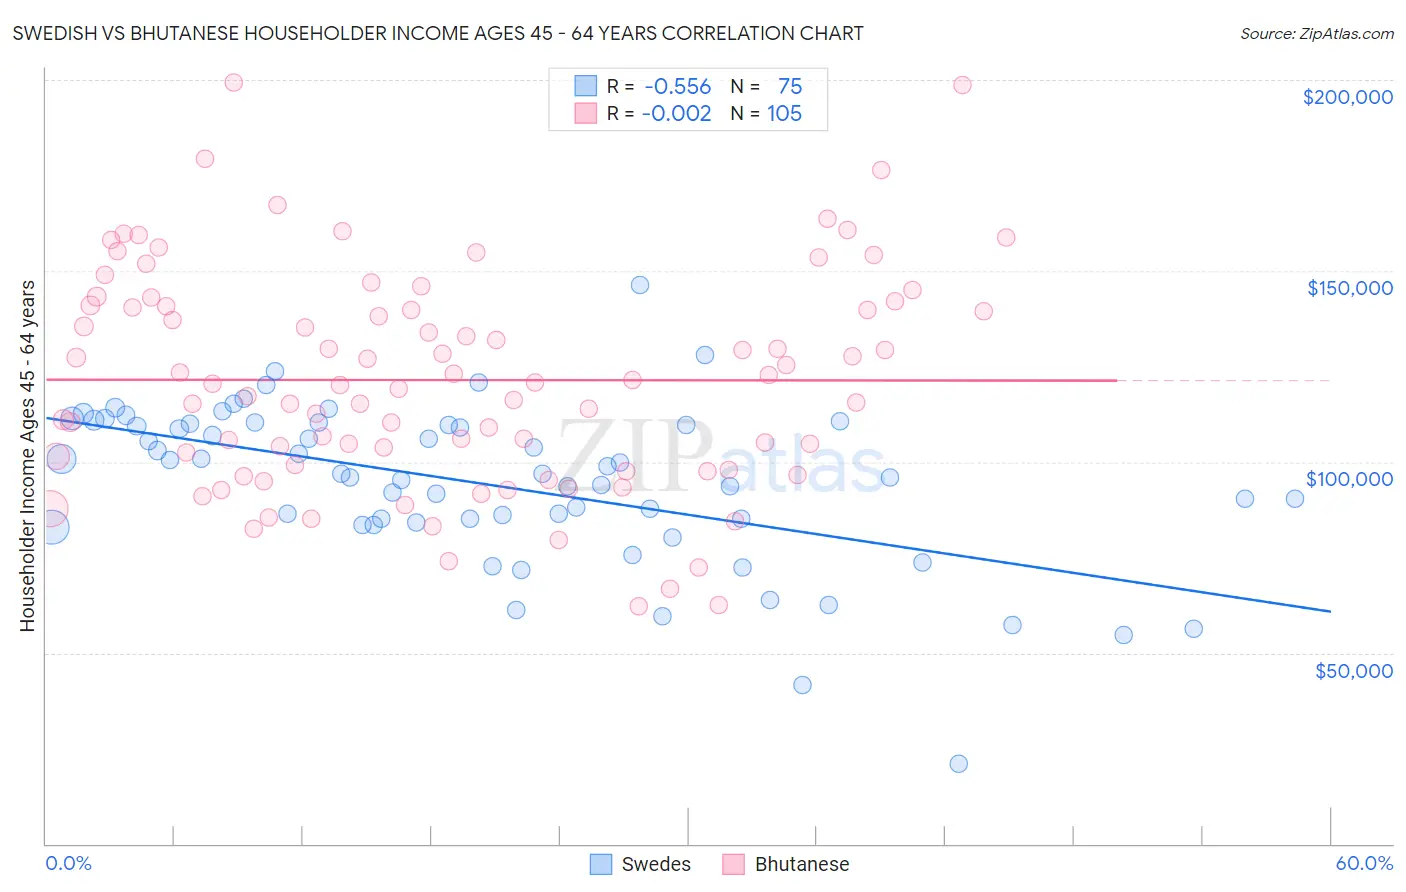 Swedish vs Bhutanese Householder Income Ages 45 - 64 years